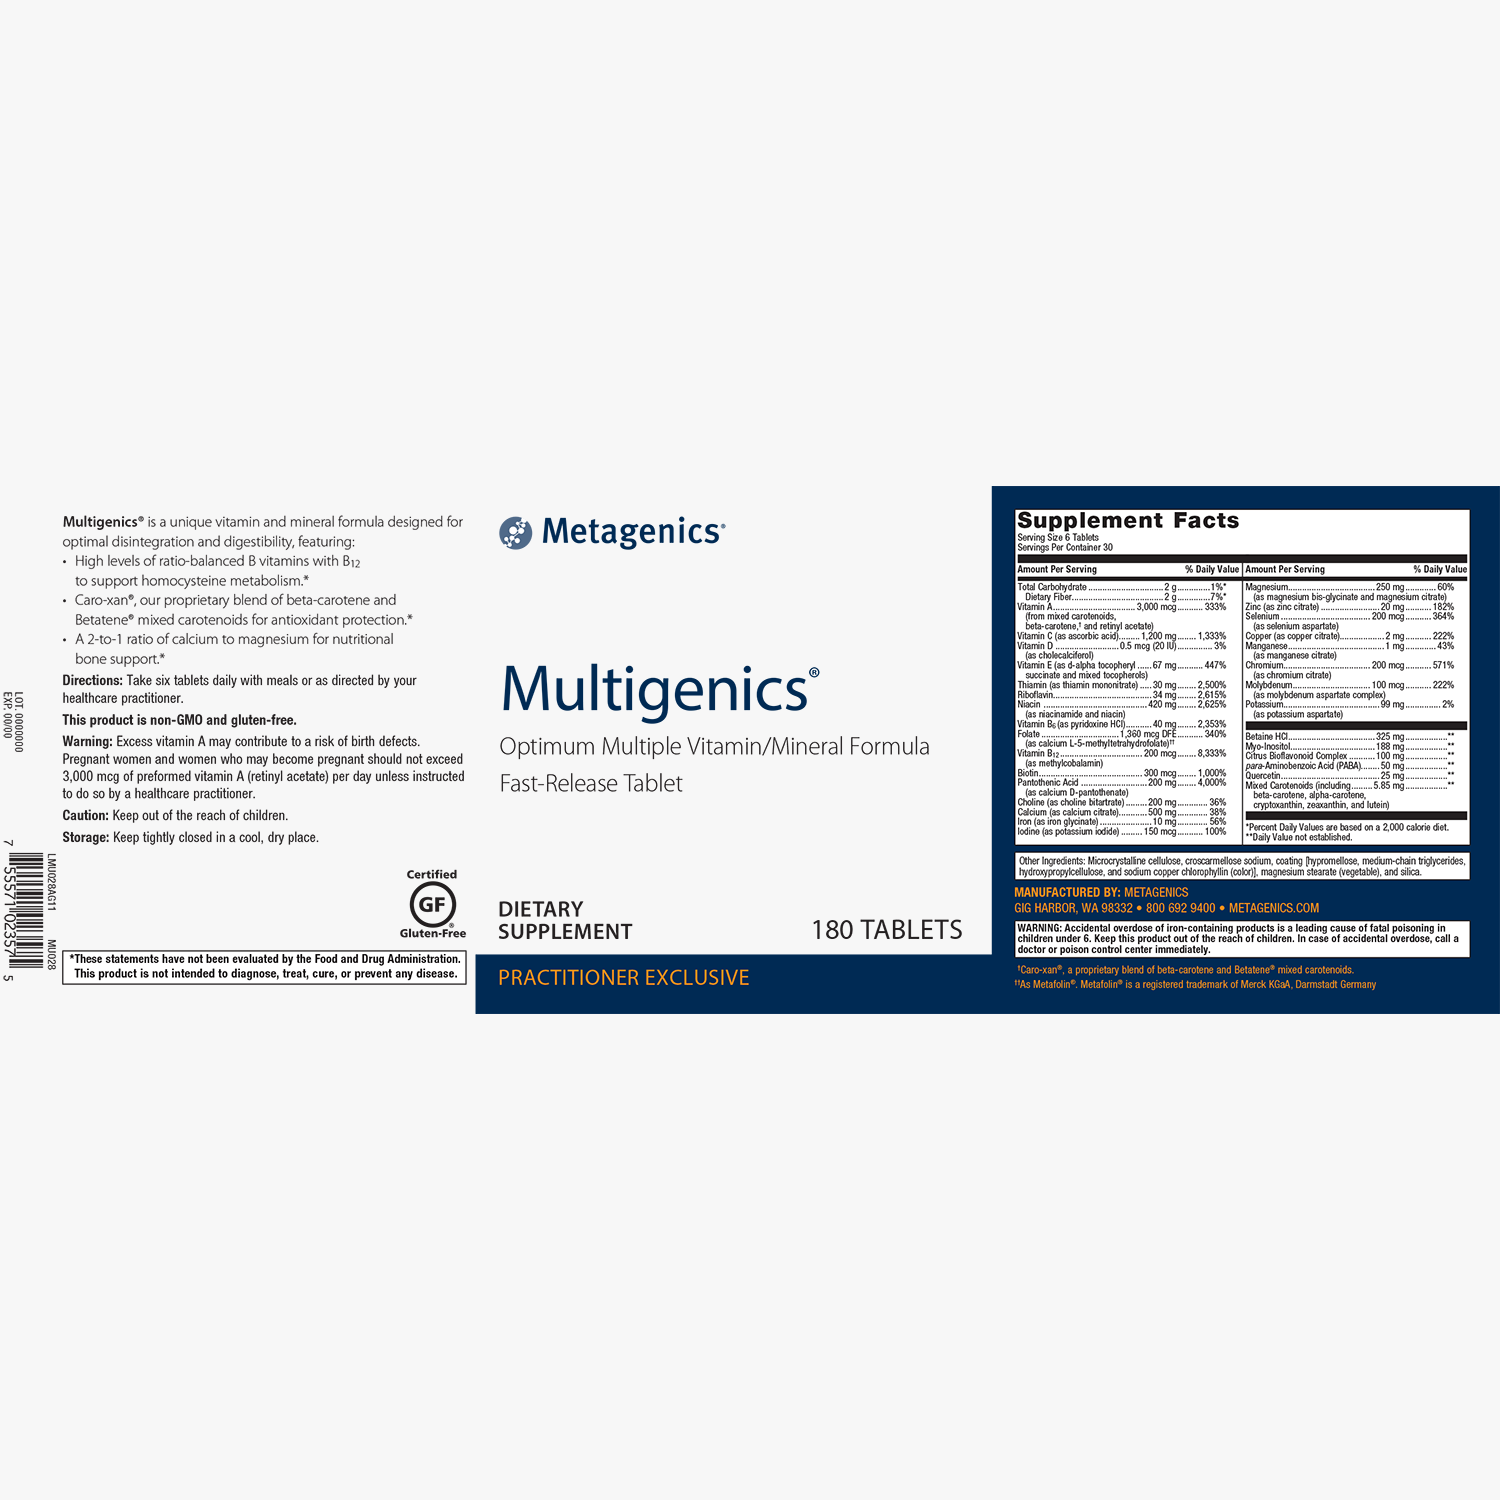 Metagenics Multigenics